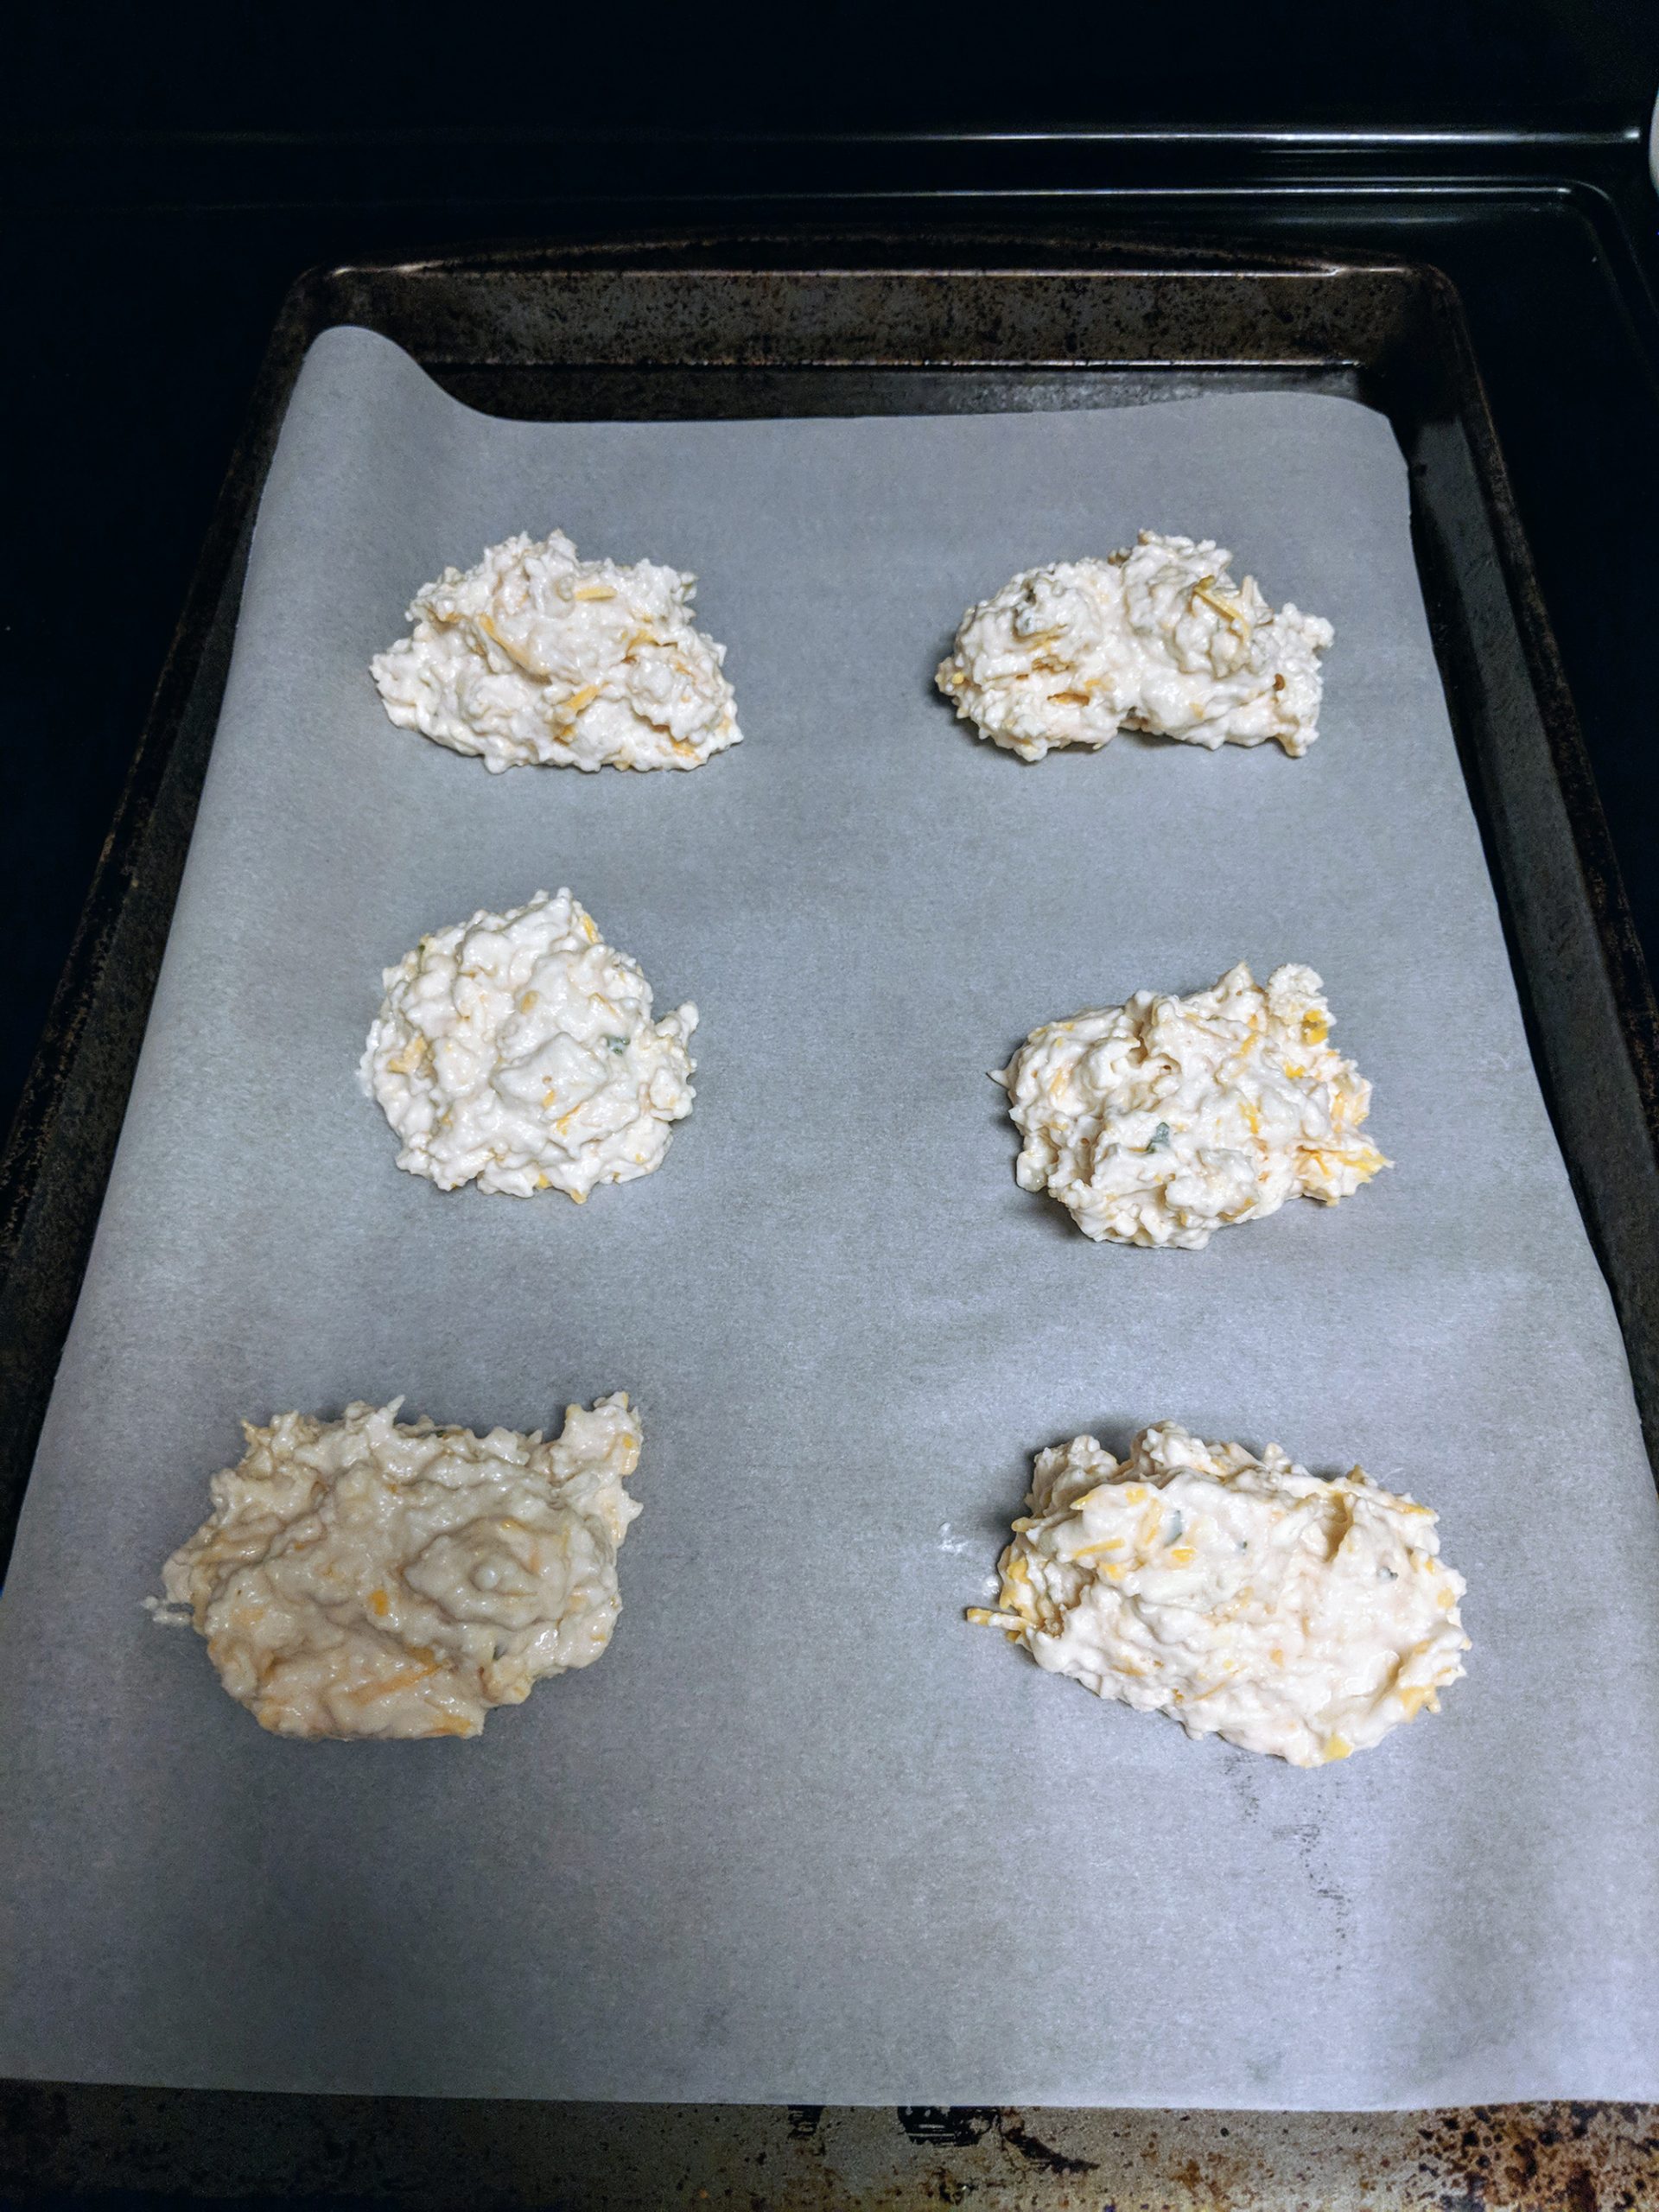 Cheesy garlic biscuits on baking sheet